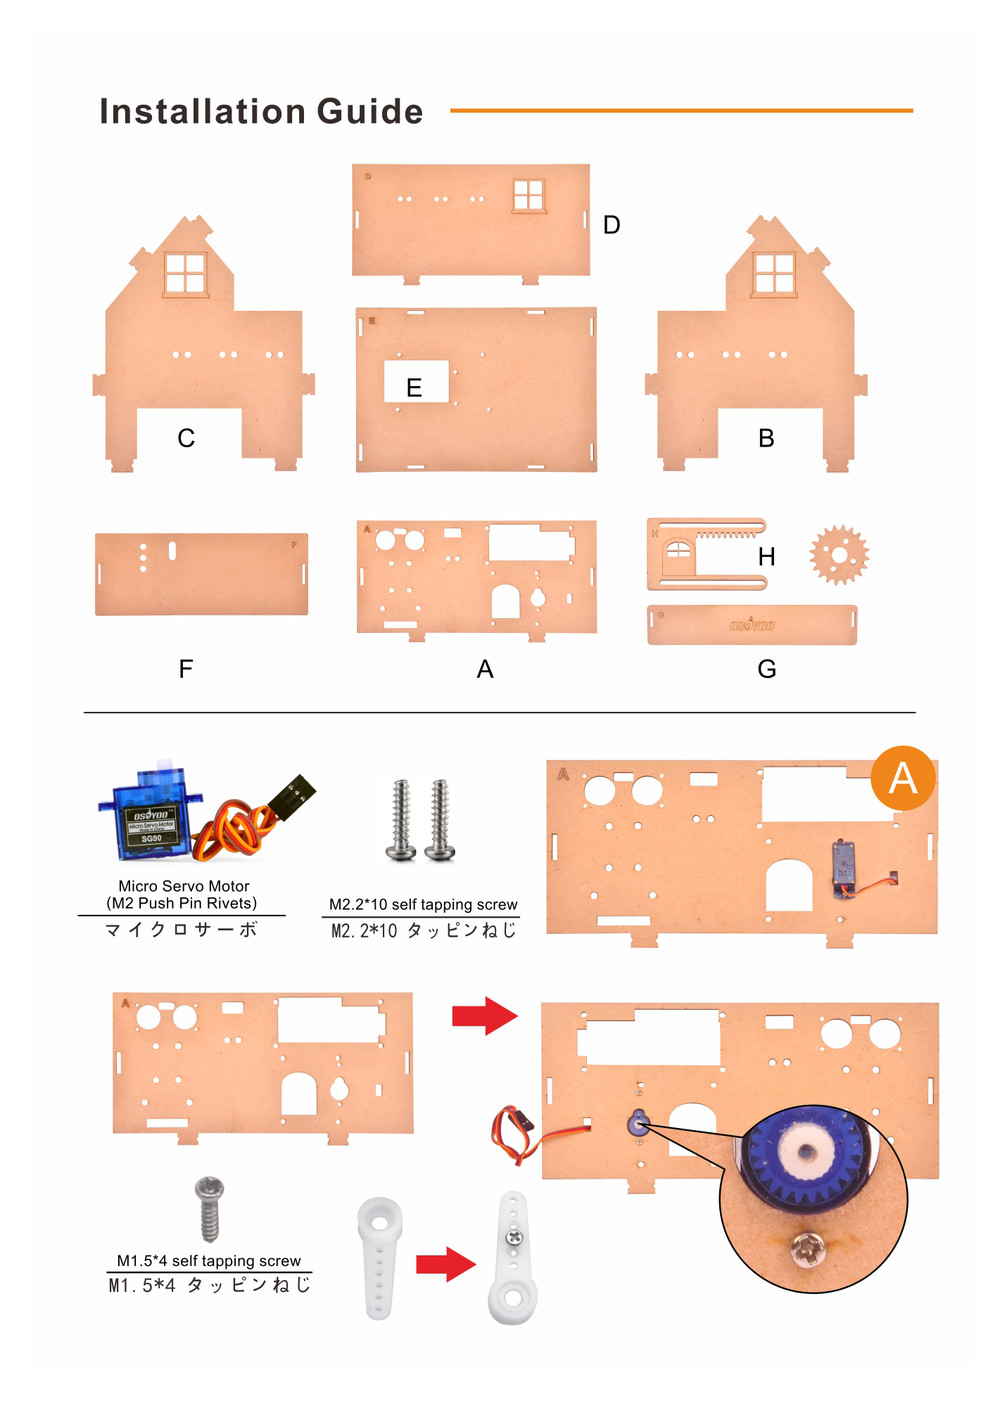 OSOYOO Smart Home IoT Kit Model Installation